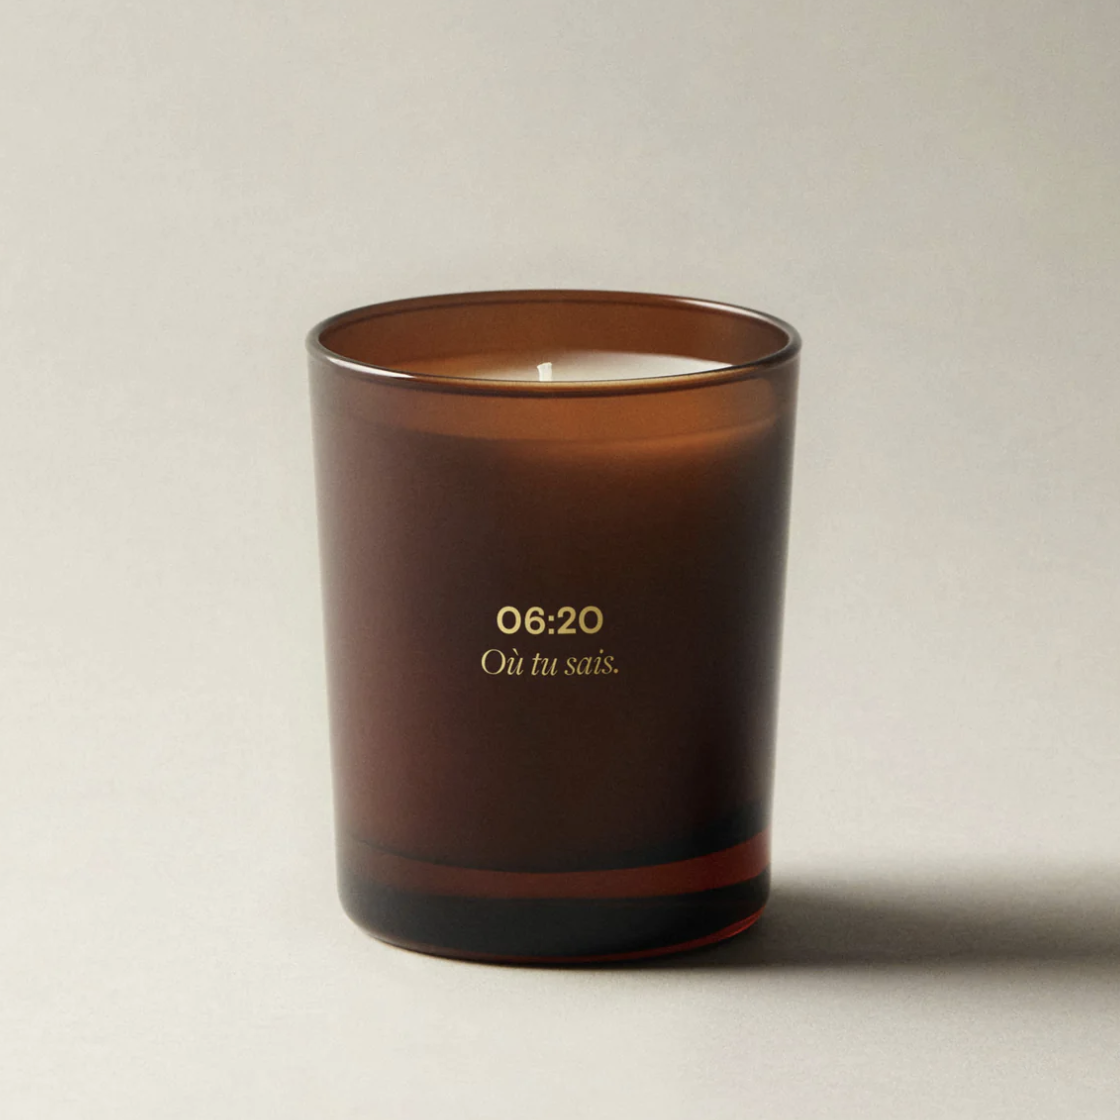 06:20 Oui tu sais - Candle by D’ORSAY